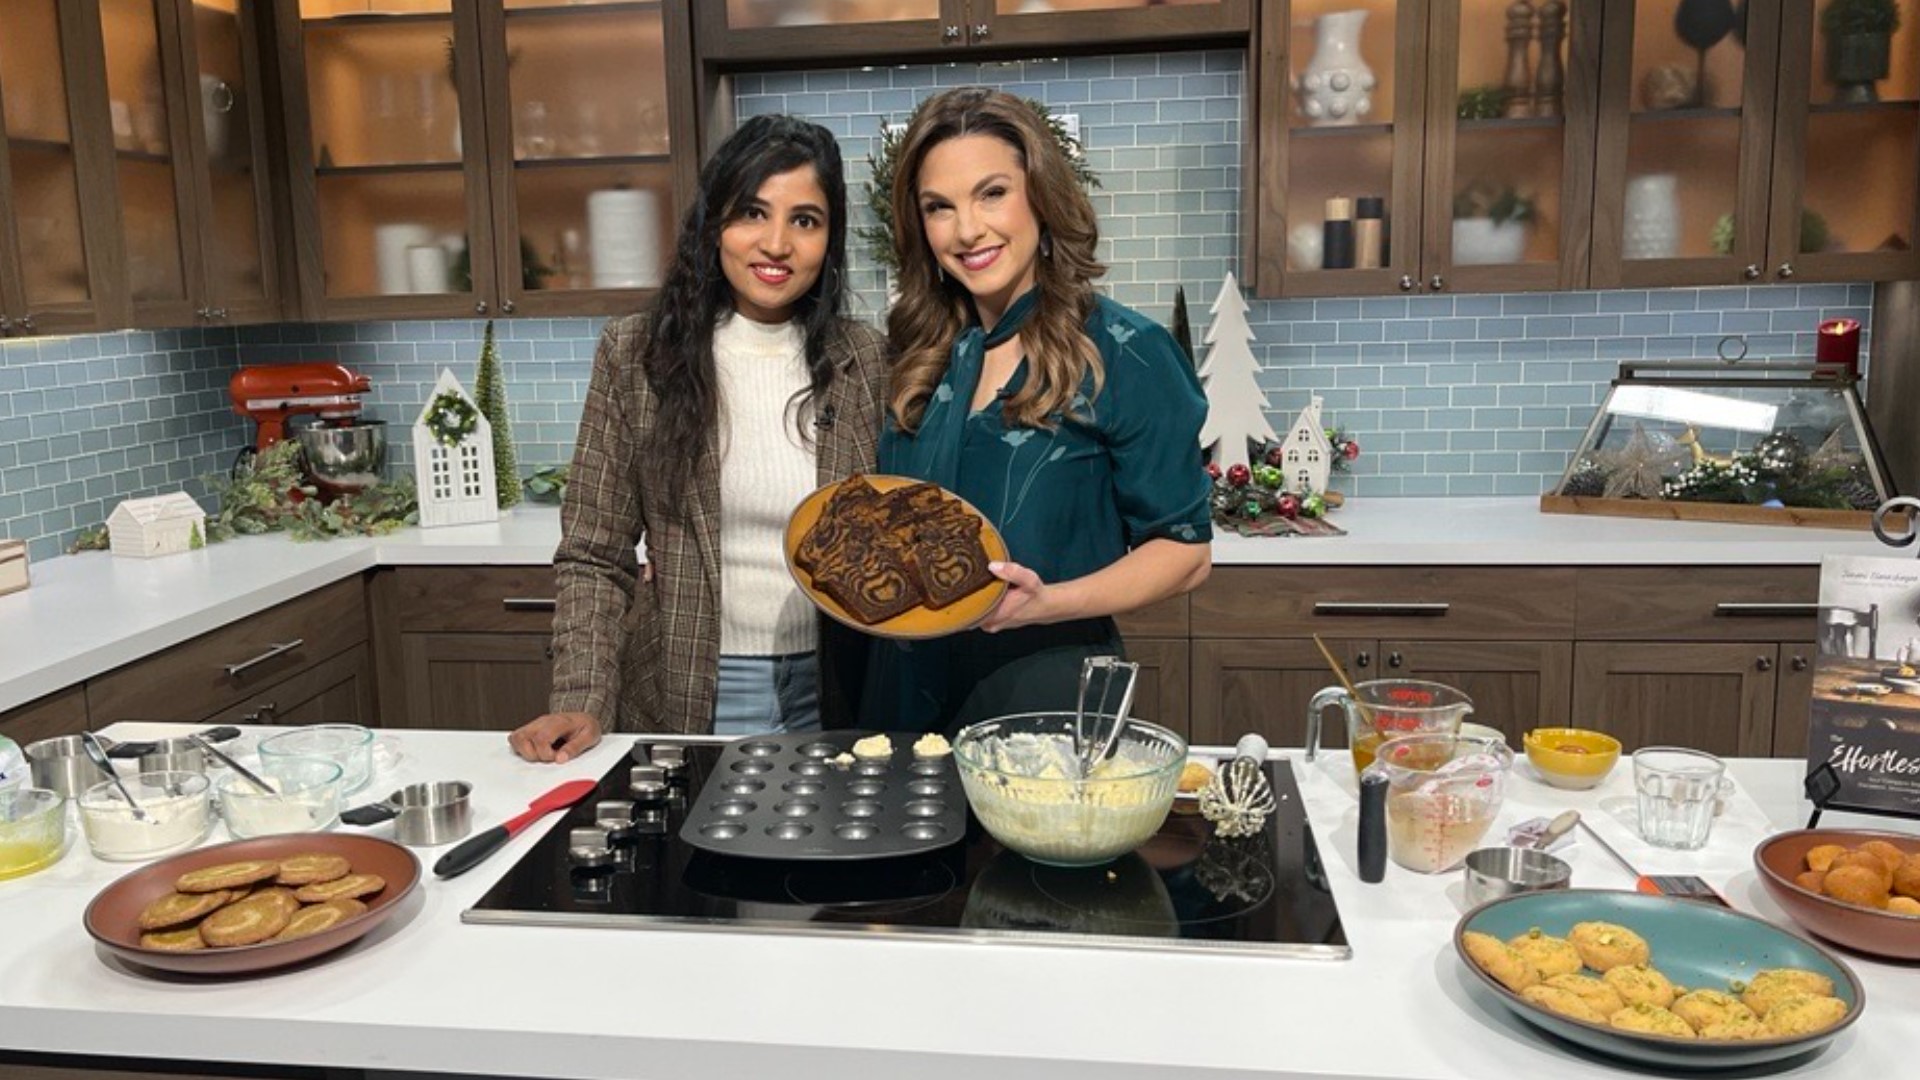 Janani Elavazhagan shares an easy dessert recipe from her new book "The Effortless Baker."